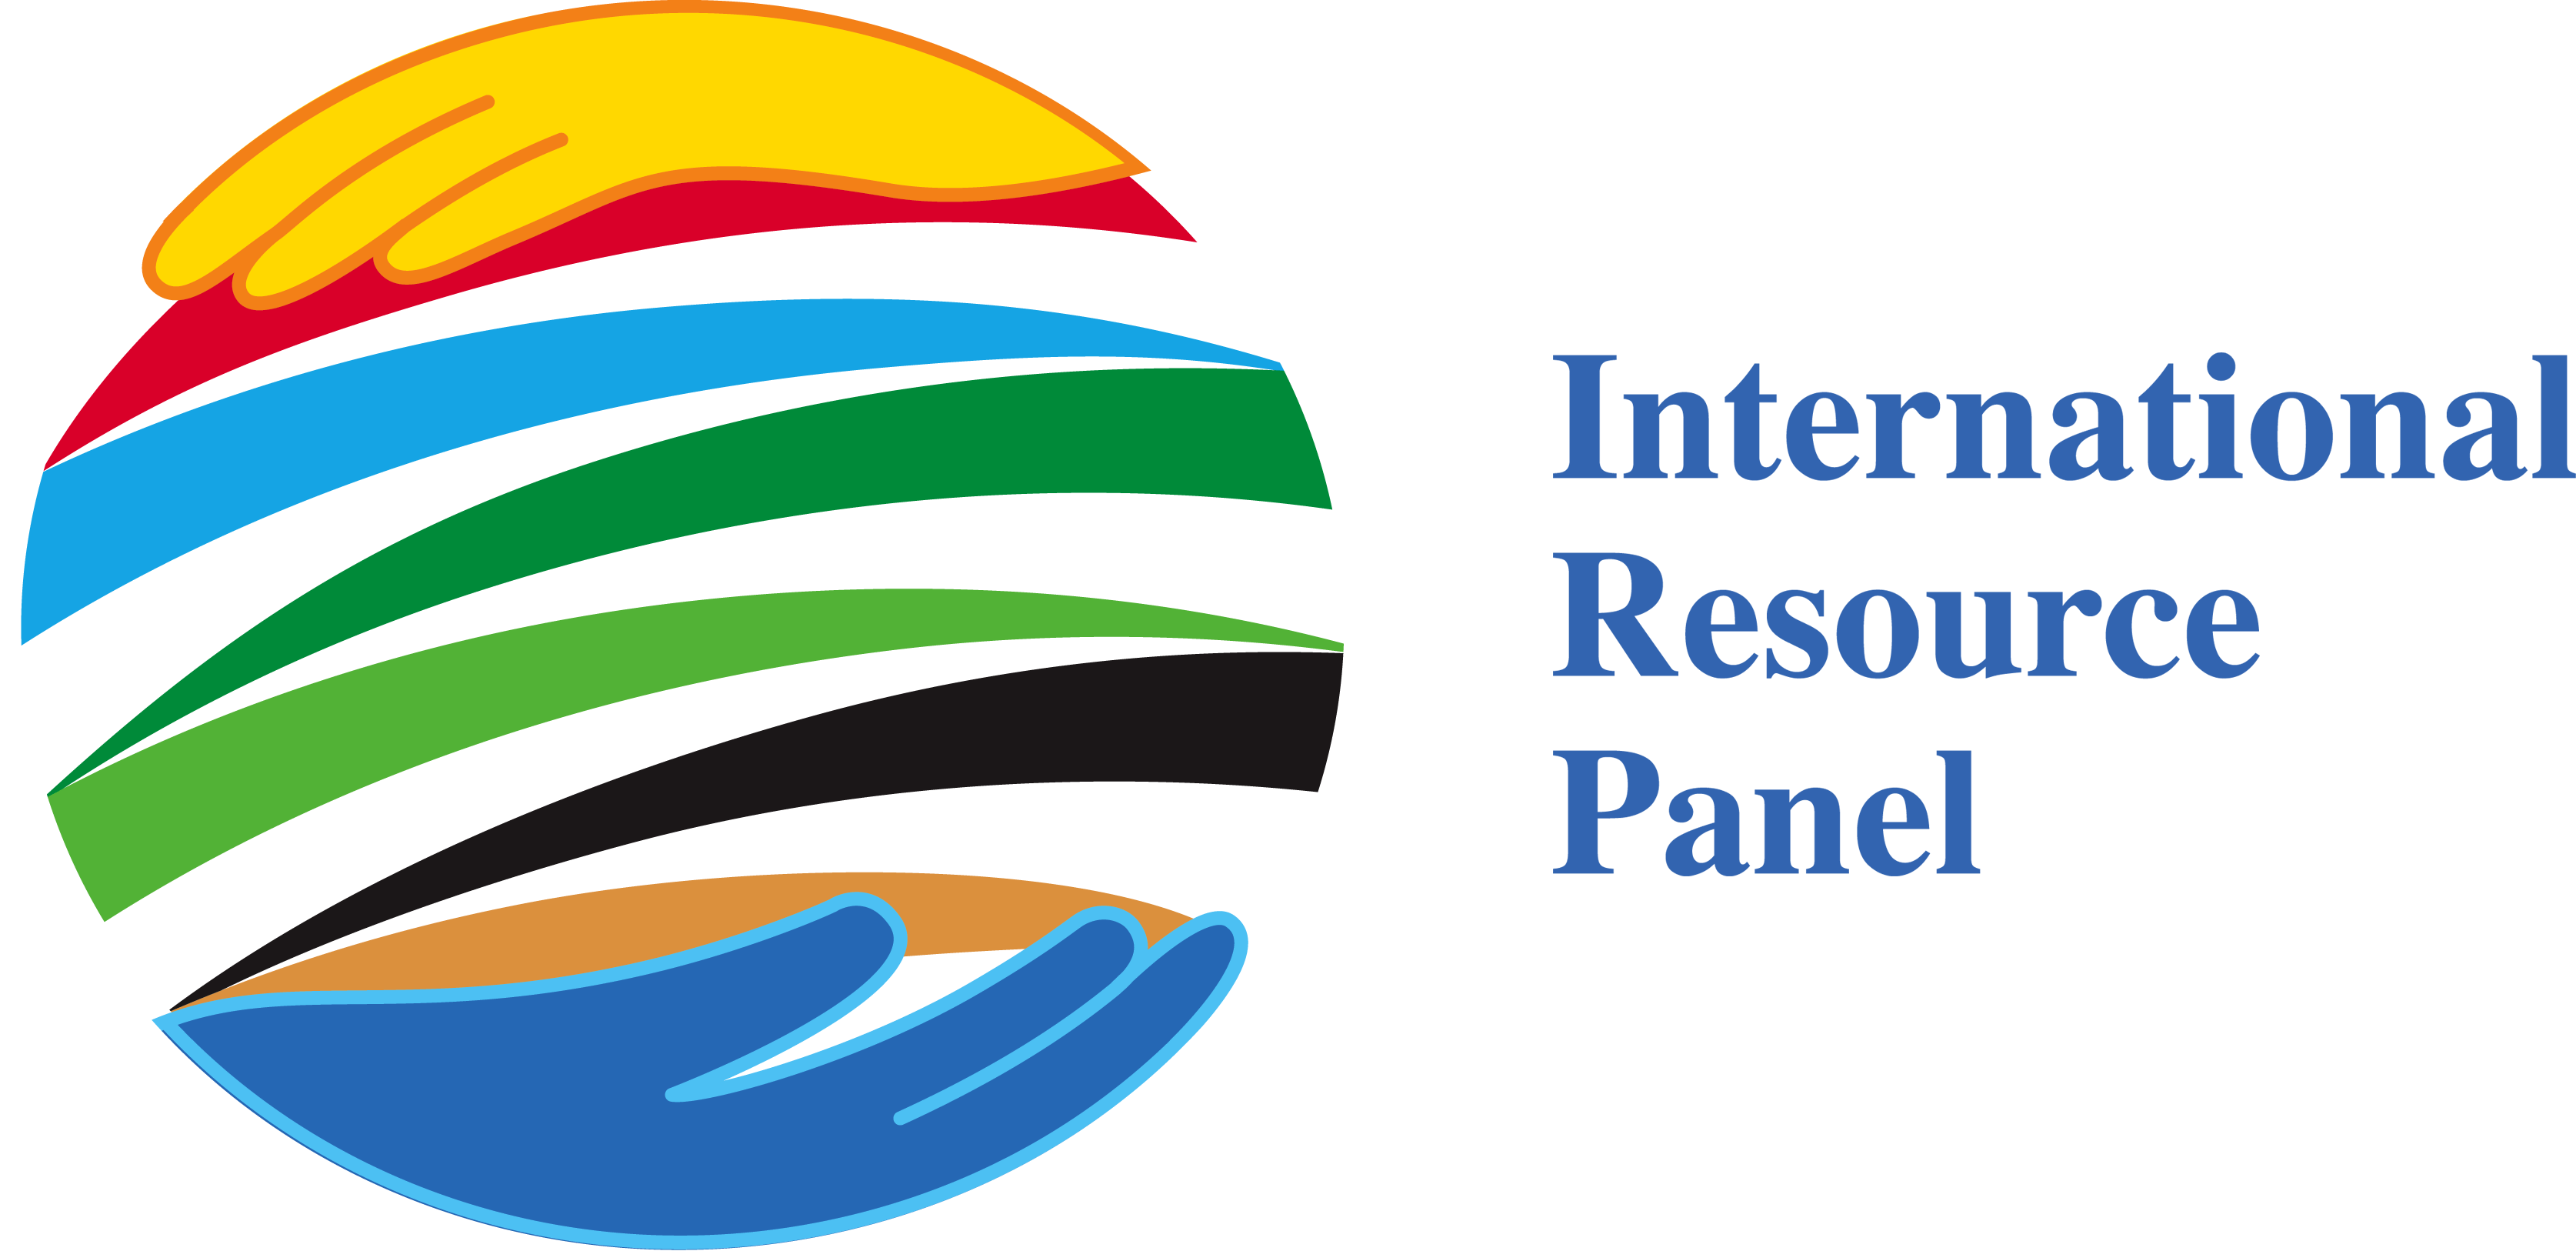 The International Resource Panel (IRP)